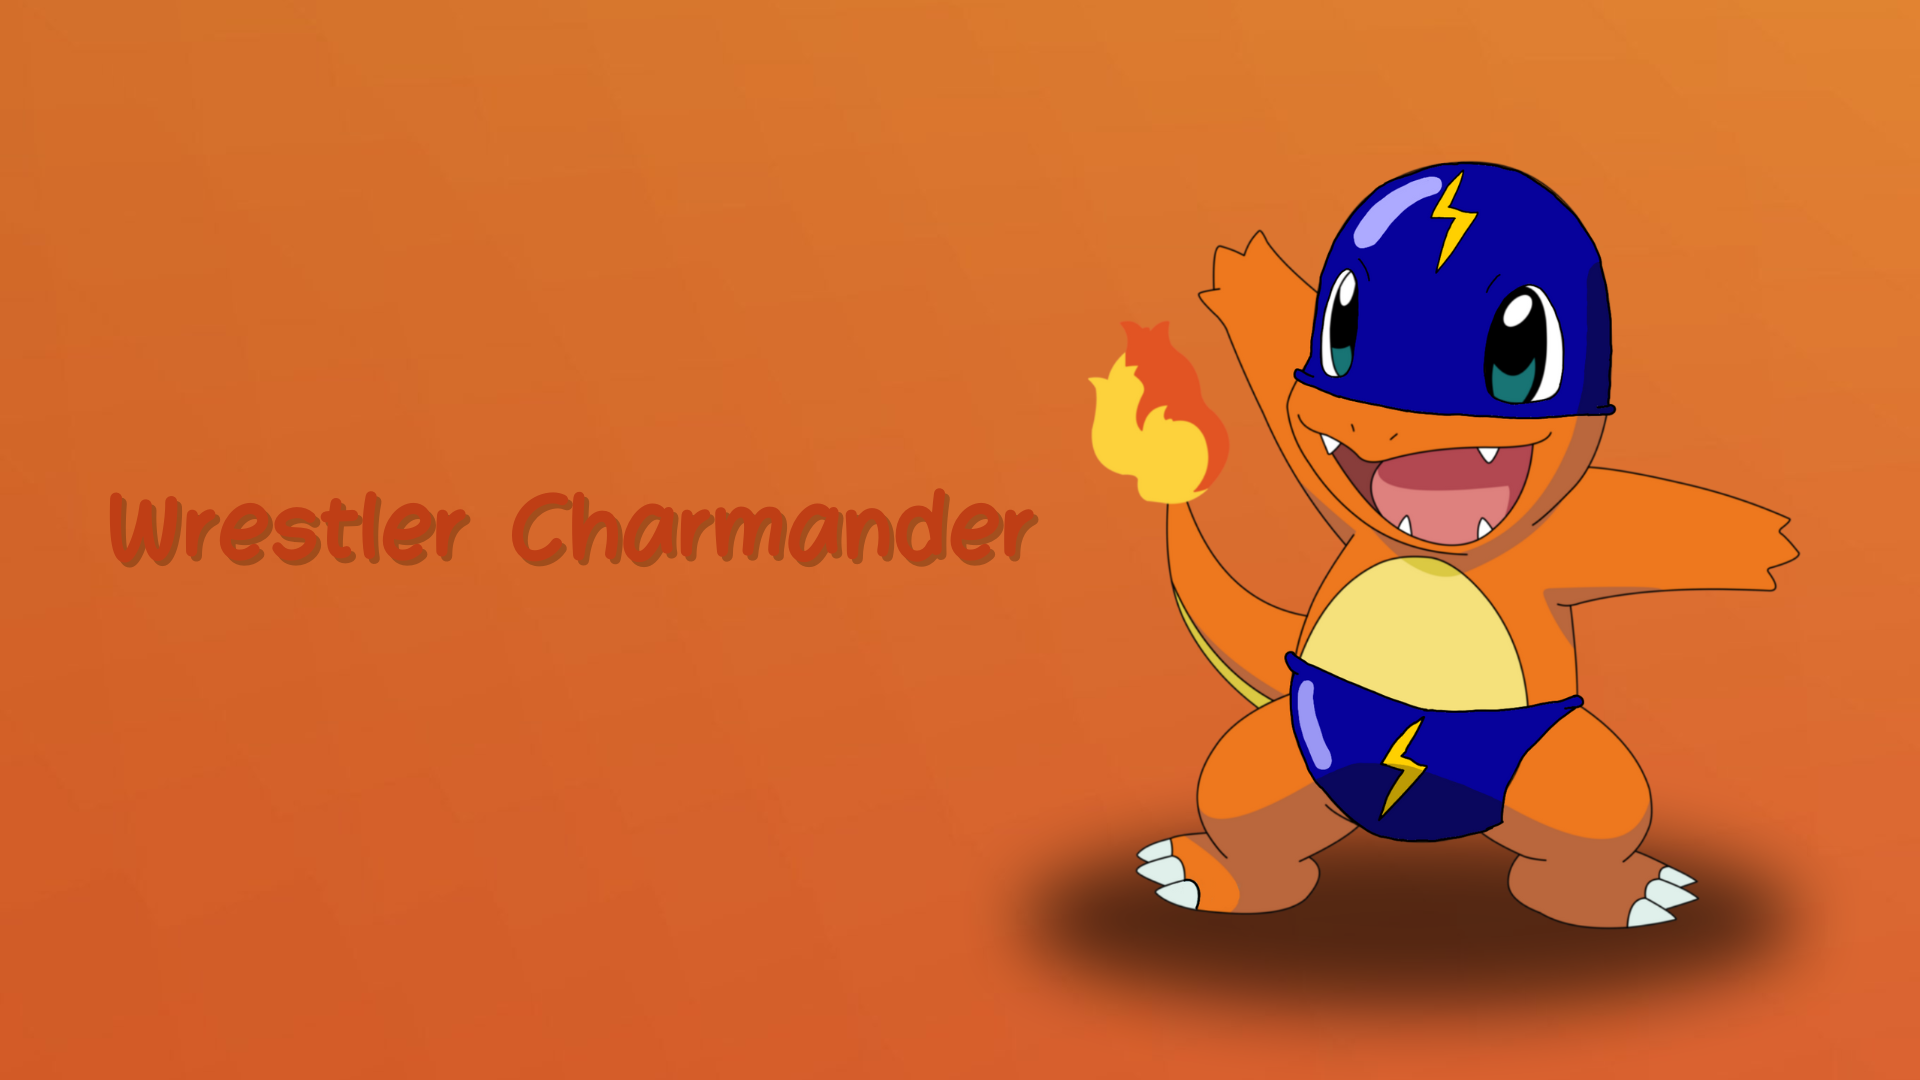 pikachu and charmander wallpaper